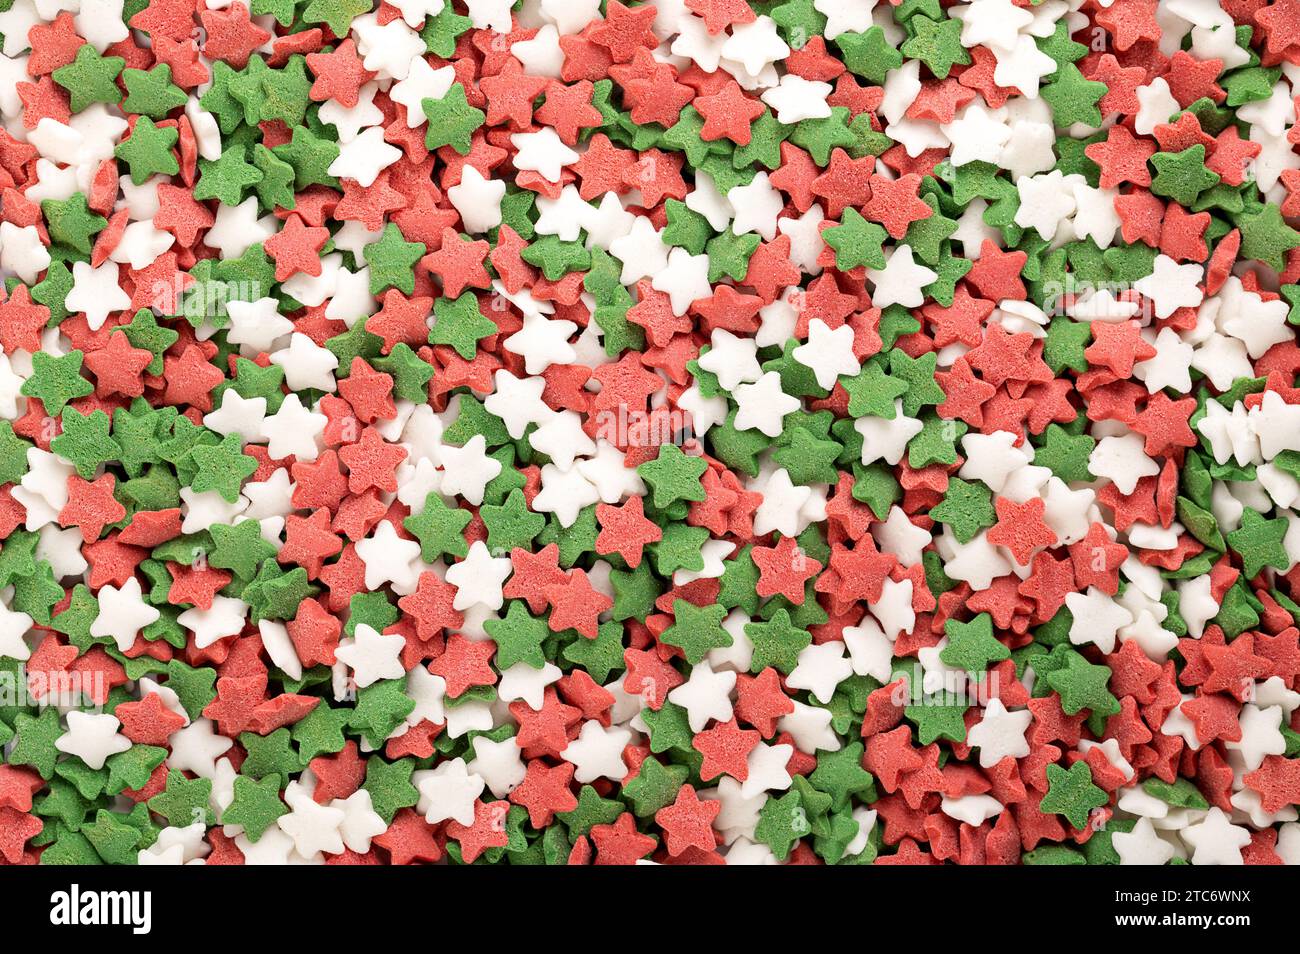 Spruzzi di zucchero a forma di stella. Sfondo di caramelle verdi, rosse e bianche, dolciumi a base di zucchero e riso. Foto Stock